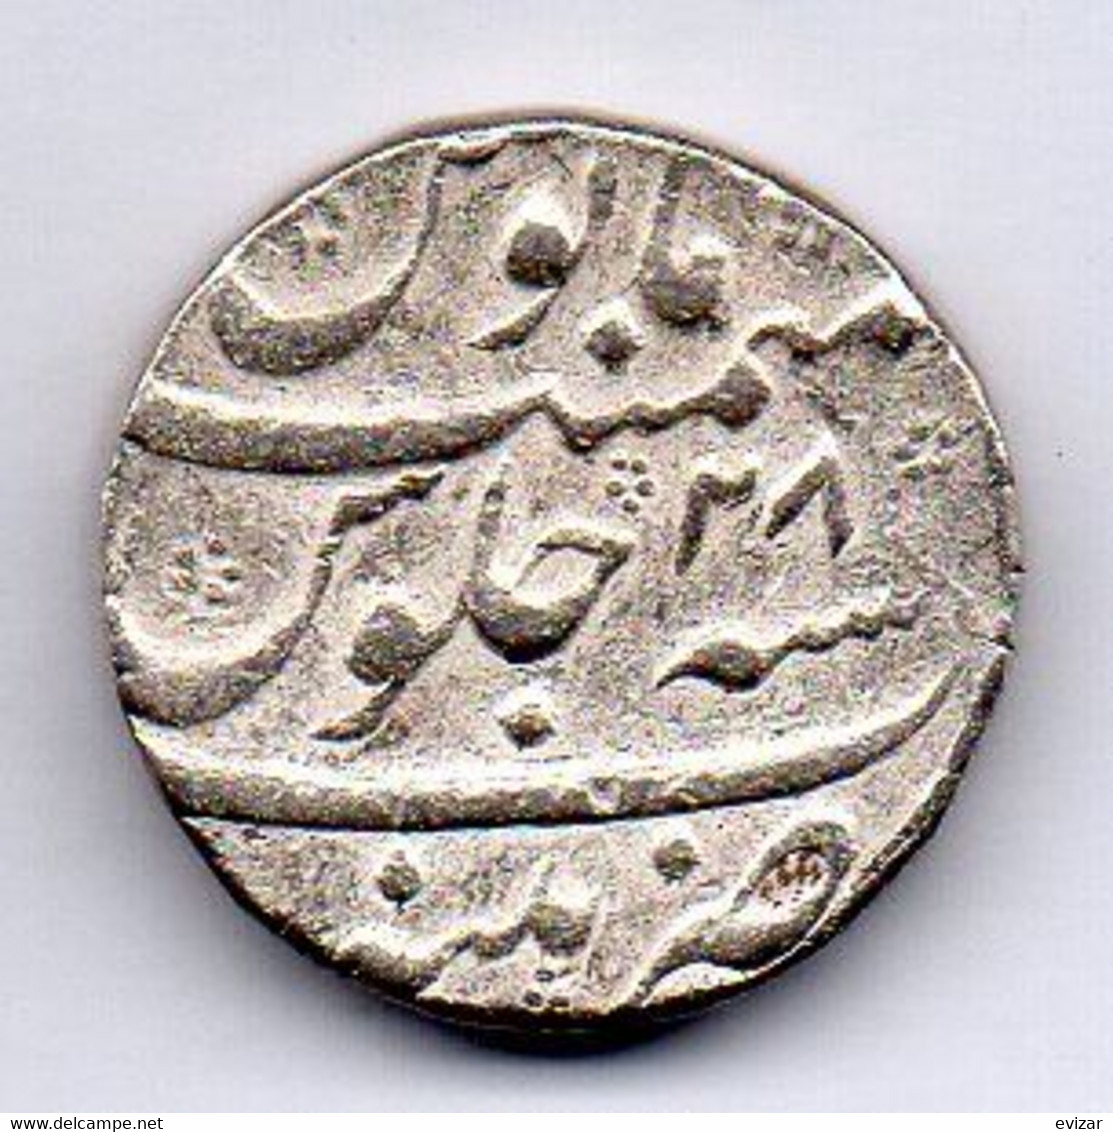 INDIA - MUGHAL EMPIRE, 1 Rupee, Silver, Year 28 (1096), KM #300.71 - India